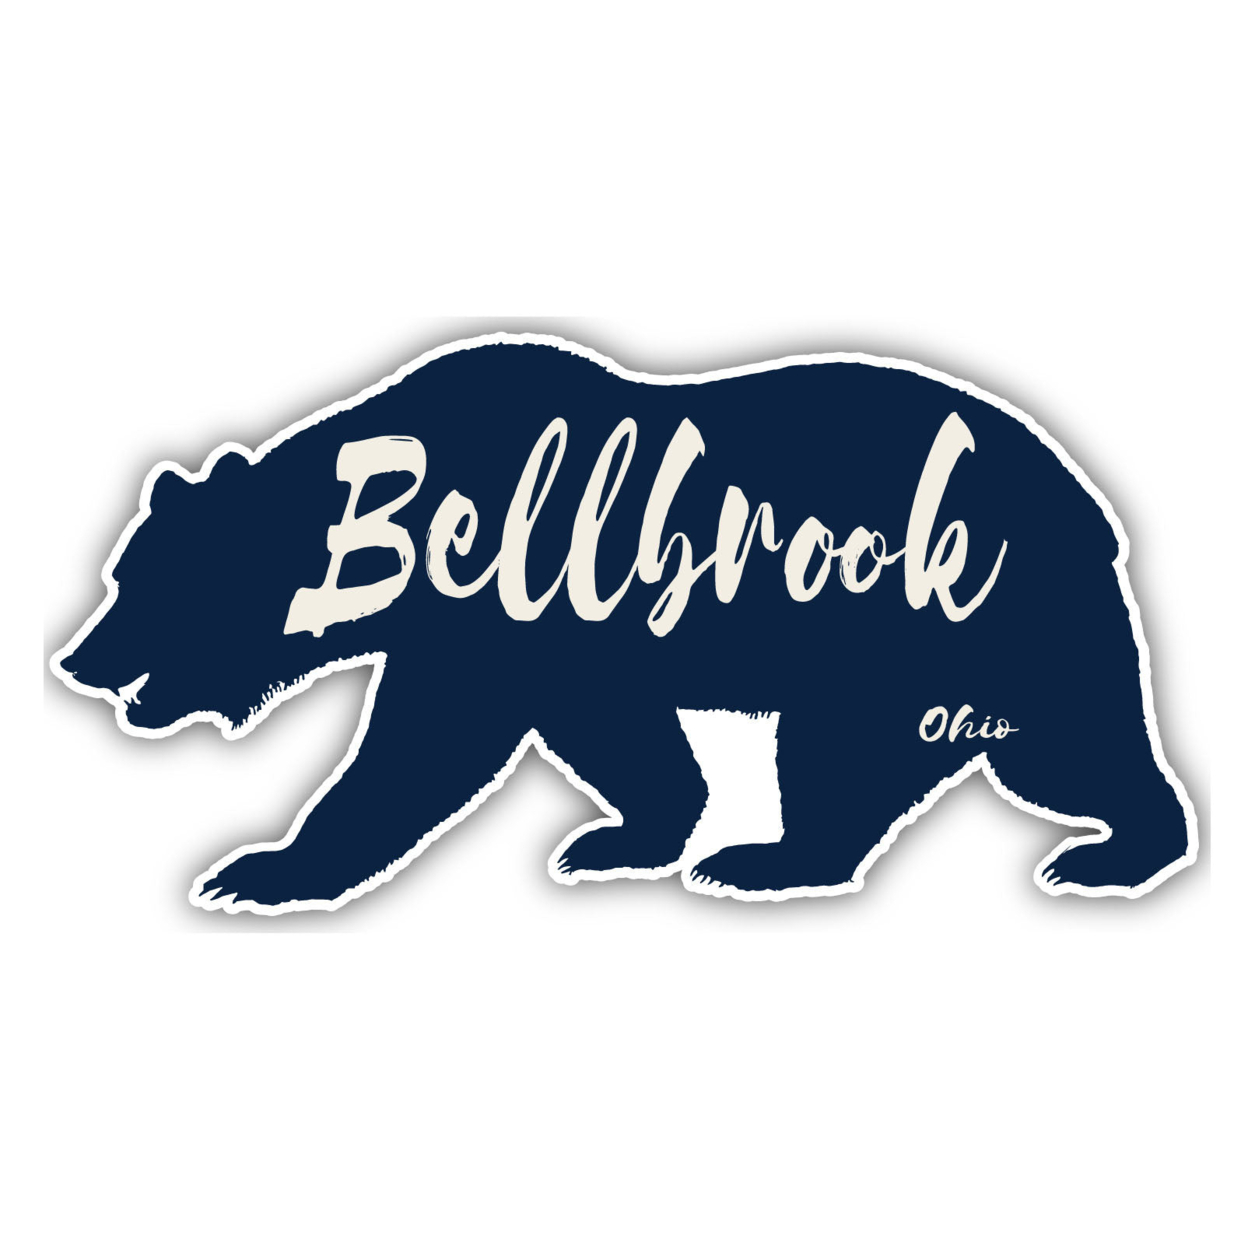 Bellbrook Ohio Souvenir Decorative Stickers (Choose Theme And Size) - Single Unit, 8-Inch, Bear